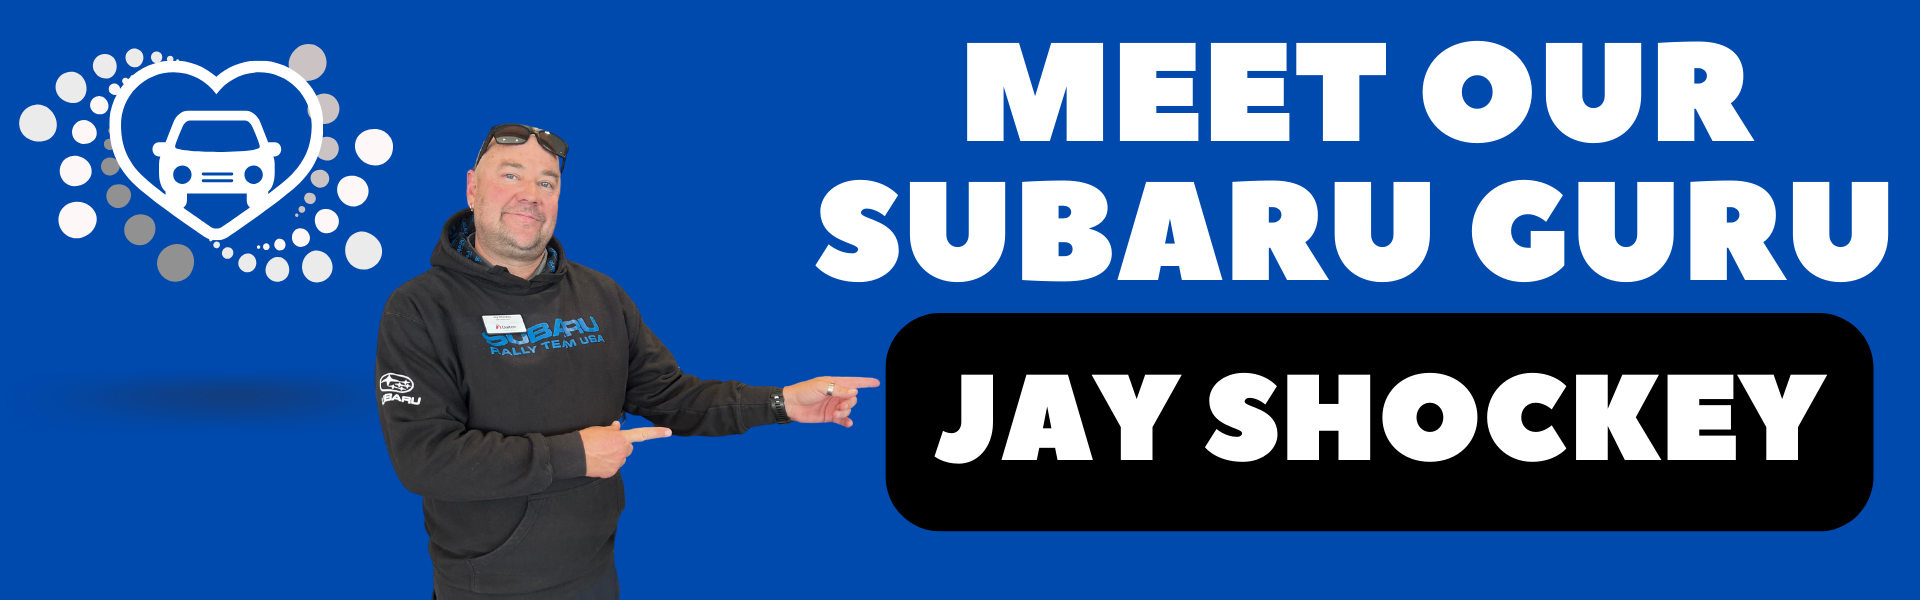 Meet Our Subaru Guru Jay Shockey